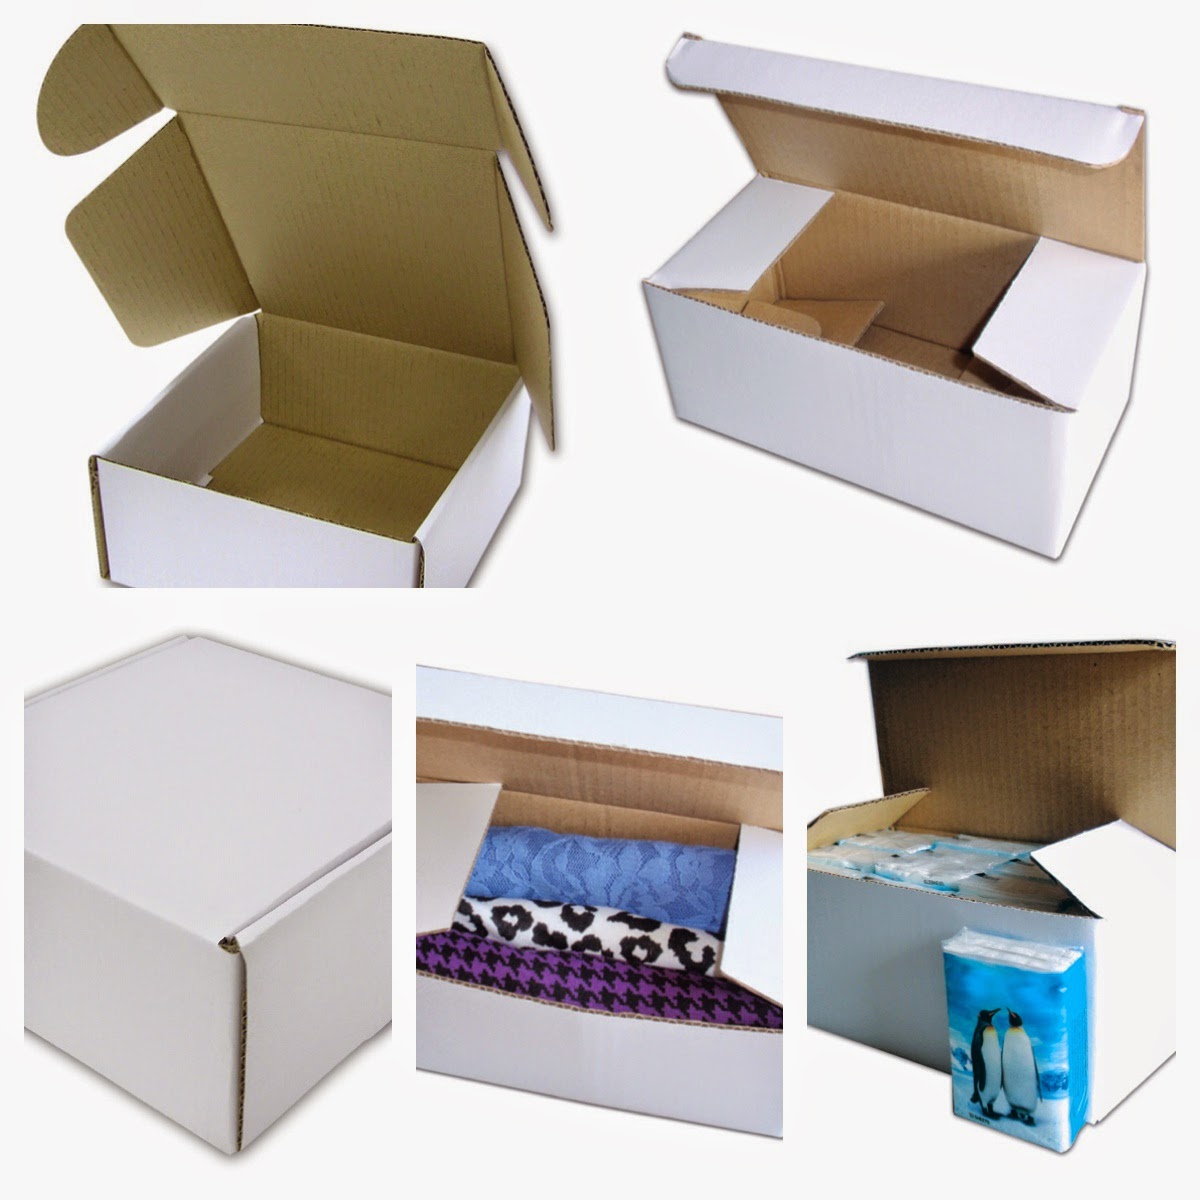 Malaysia Boxes The Box Company Kotak Kertas  Malaysia